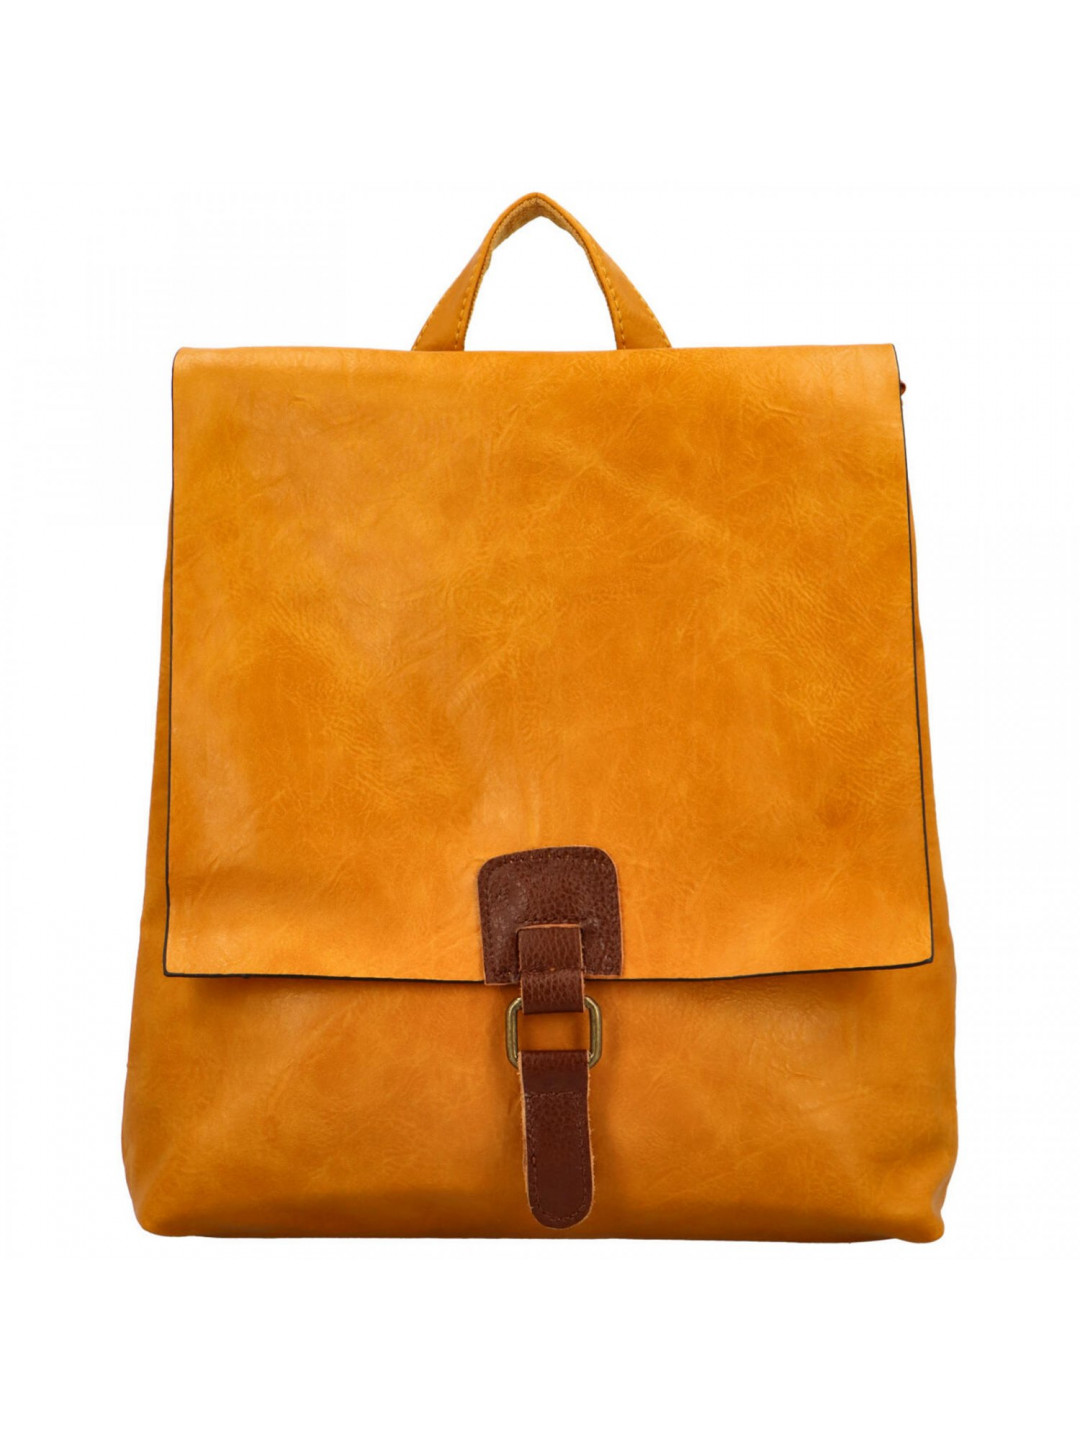 Dámský kabelko batoh žlutý – Paolo bags Olefir